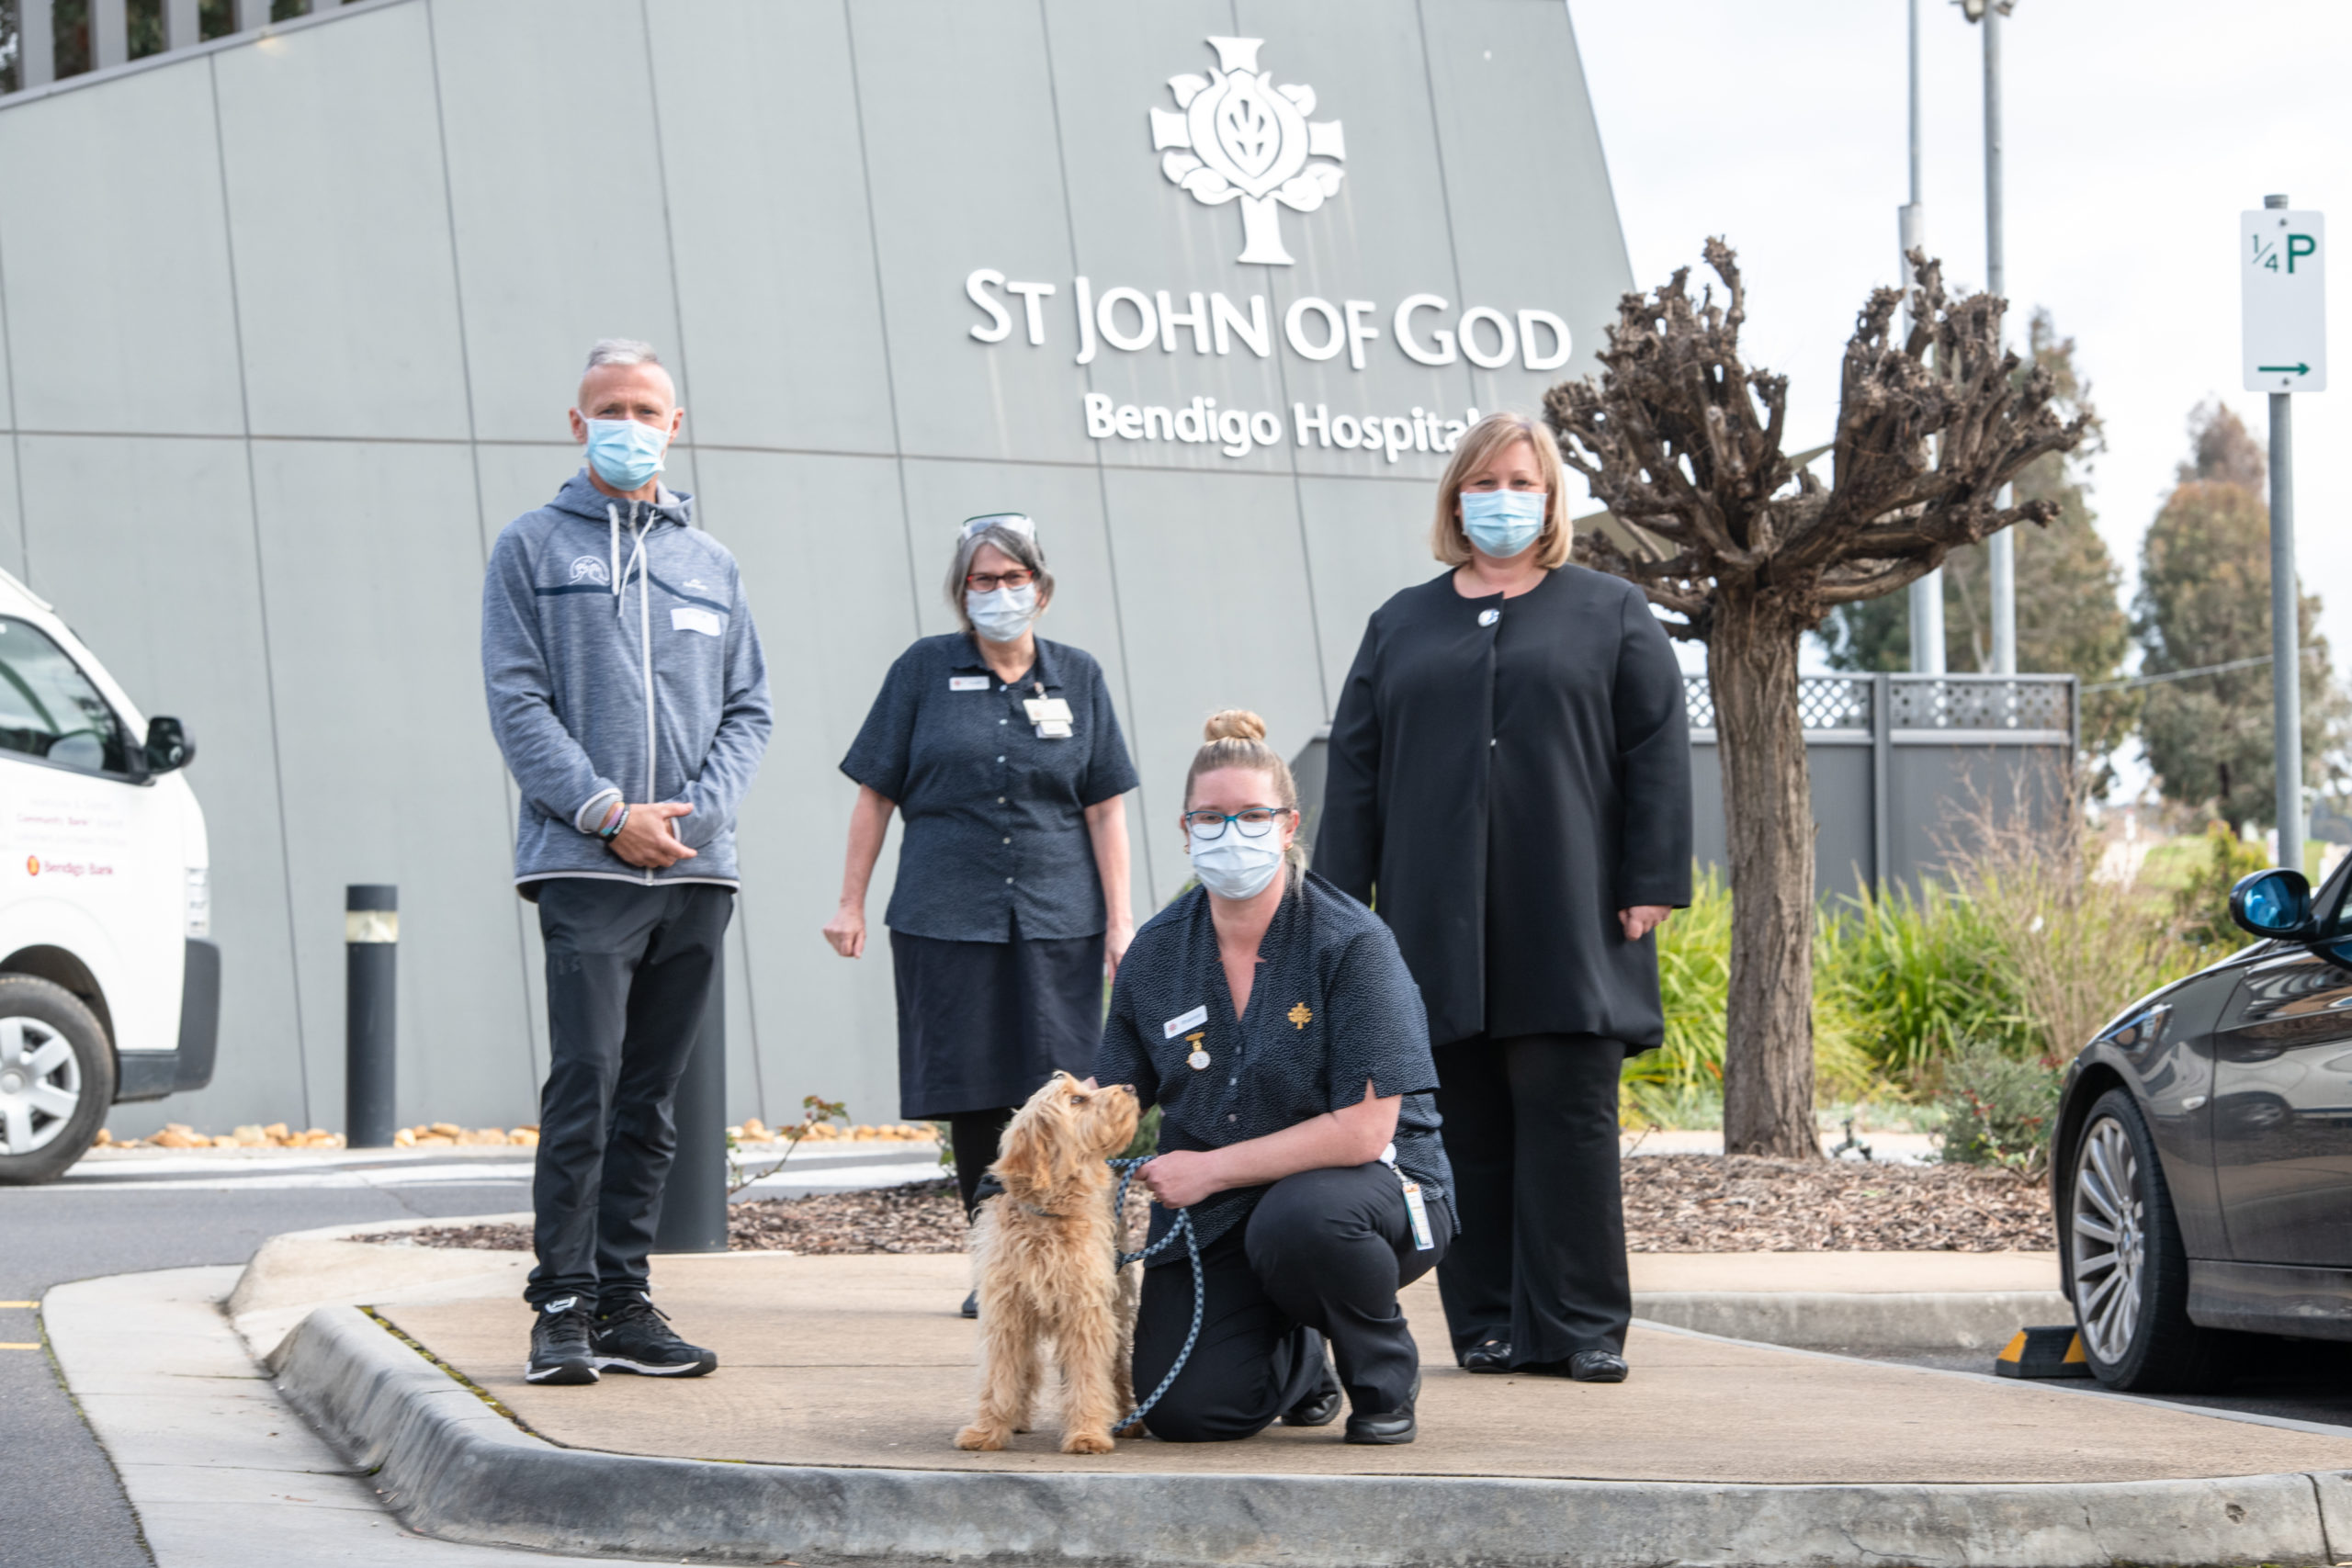 St John of God Bendigo Hospital welcomes Rose their wellbeing dog